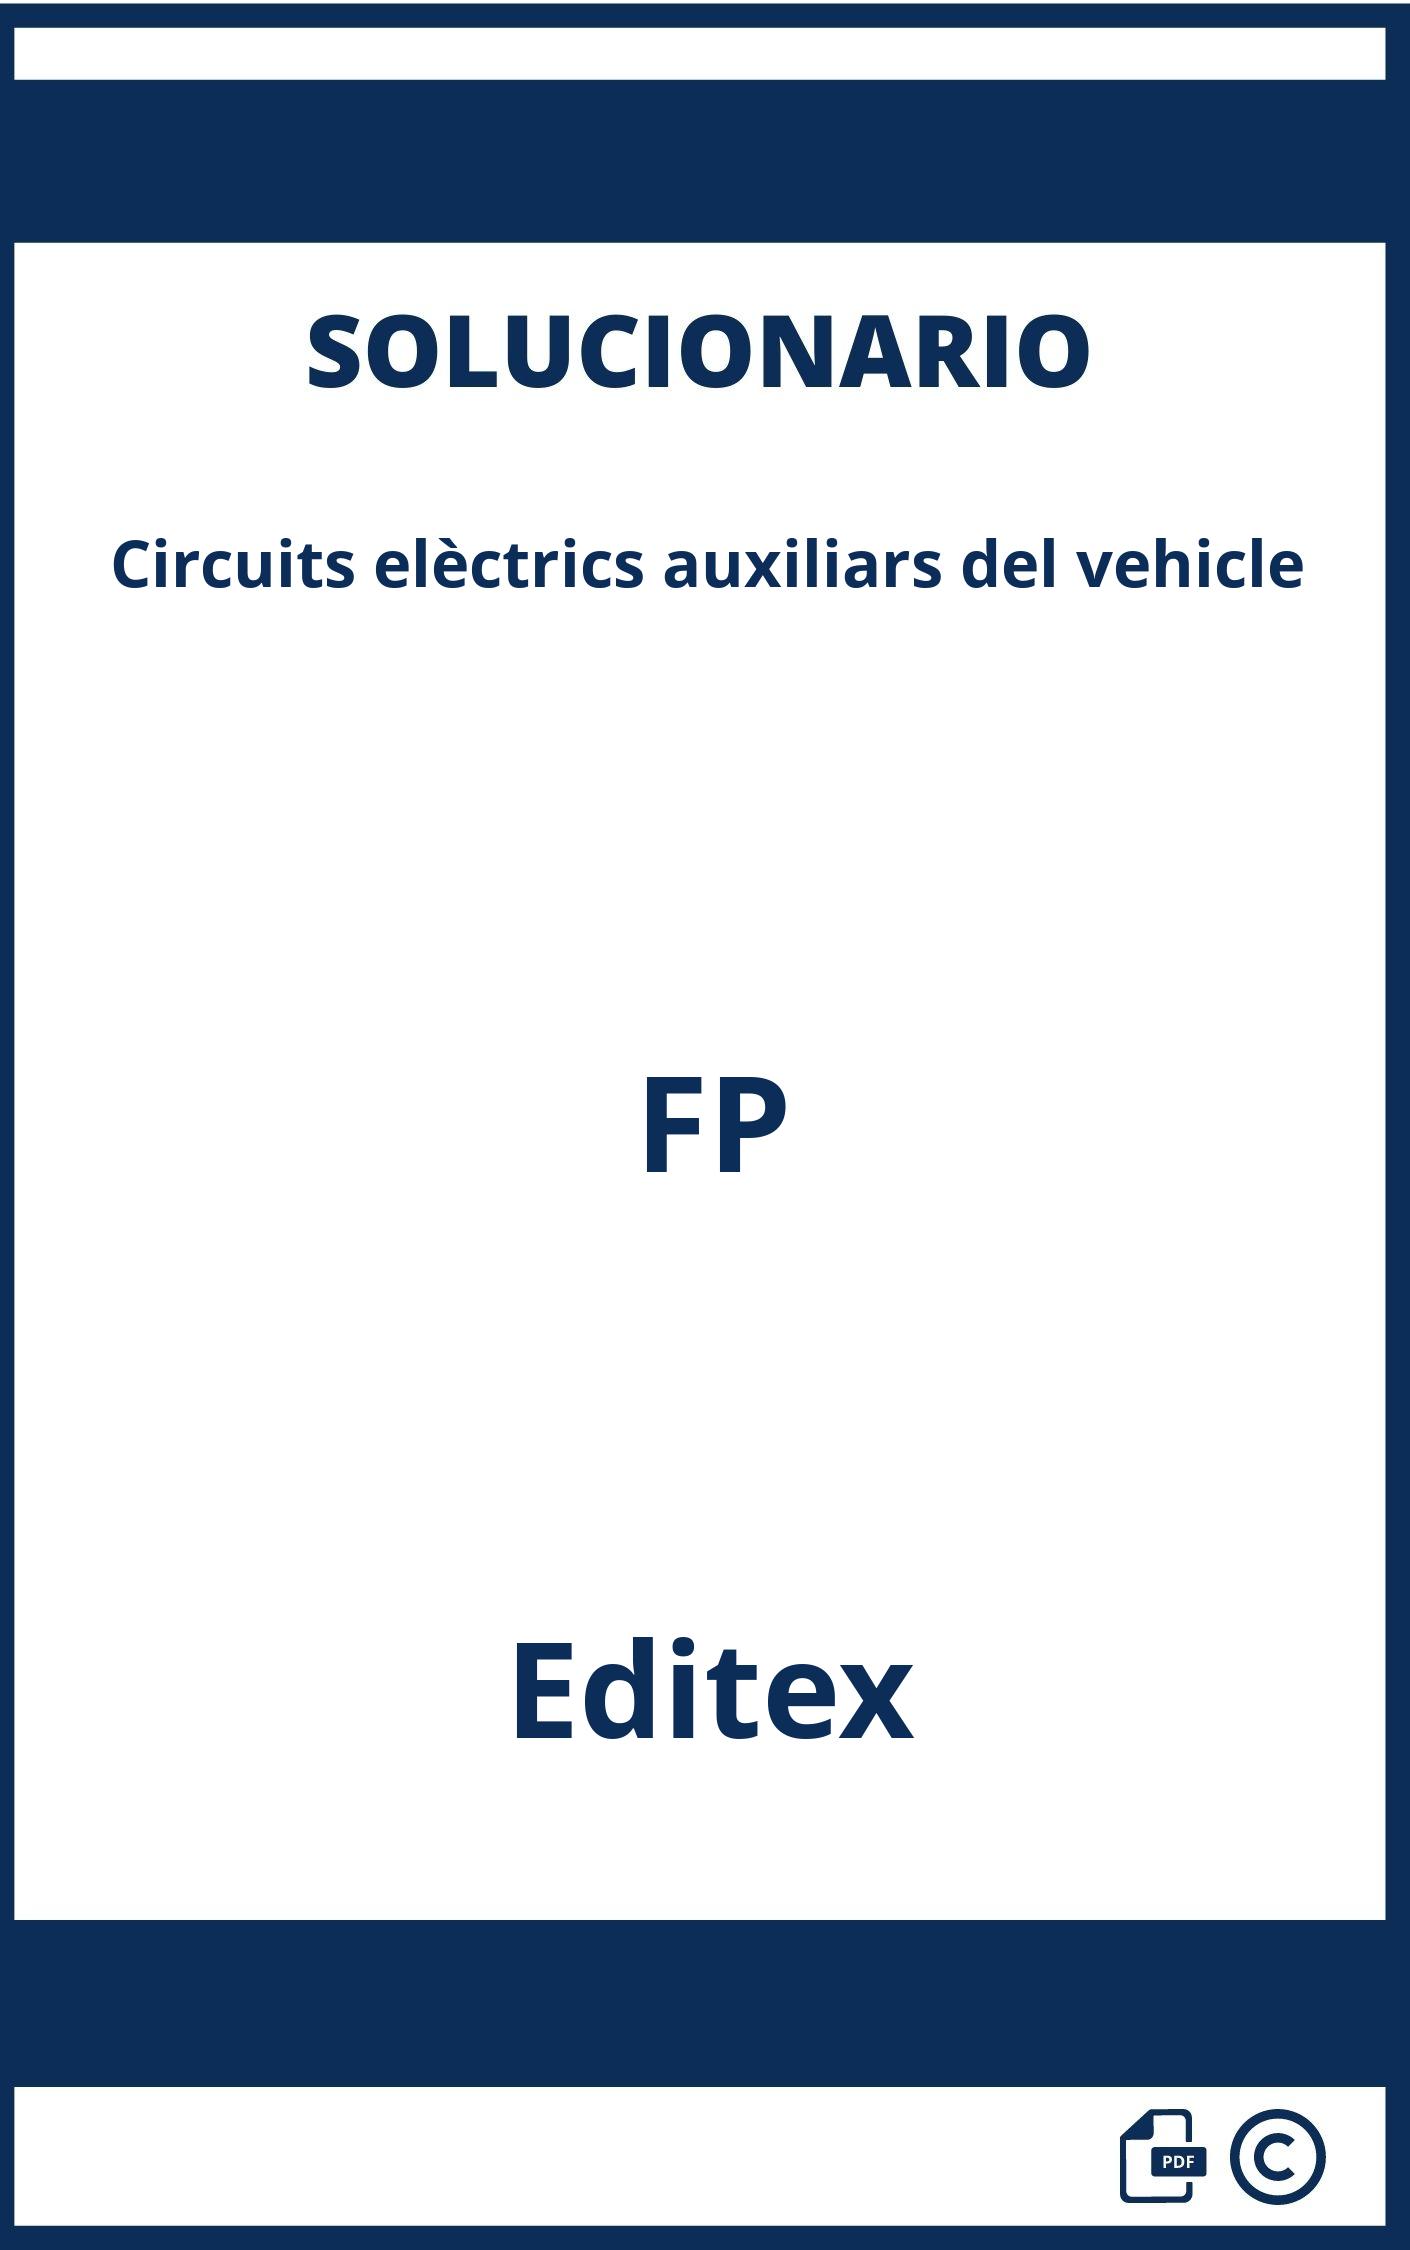 Solucionario Circuits electrics auxiliars del vehicle FP Editex